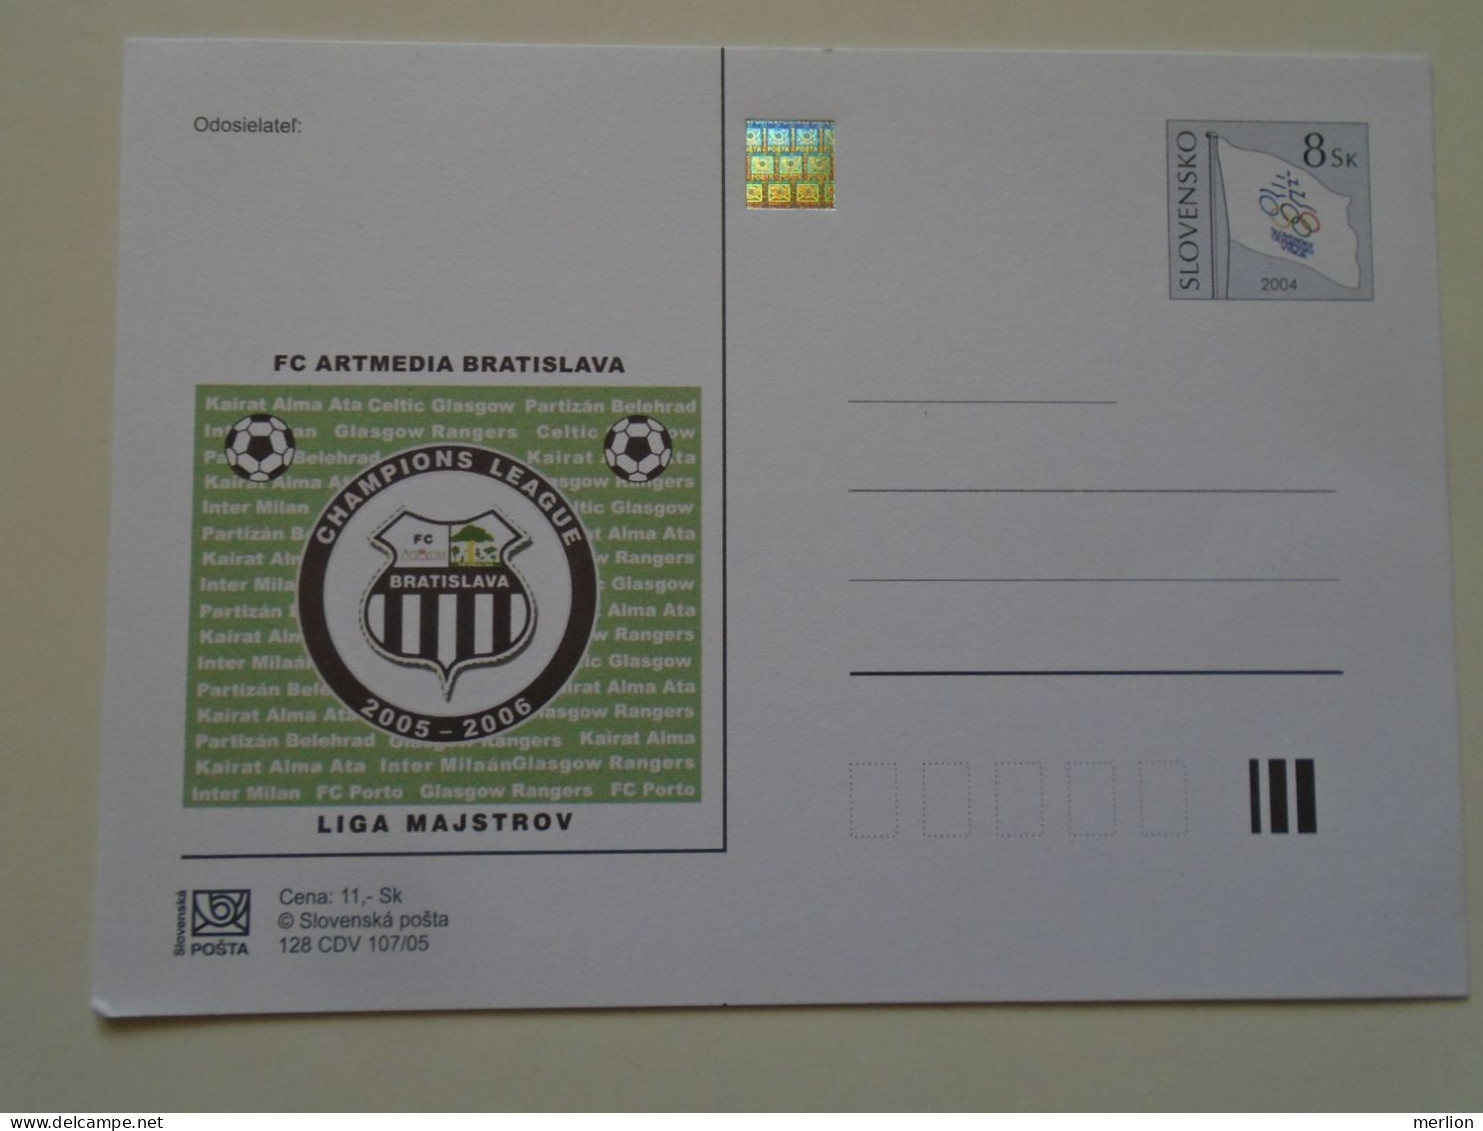 D196984    Slovensko   Slovakia   Bratislava 2004  Postal Stationery  FC Artmedia Bratislava - Champions League - Postales